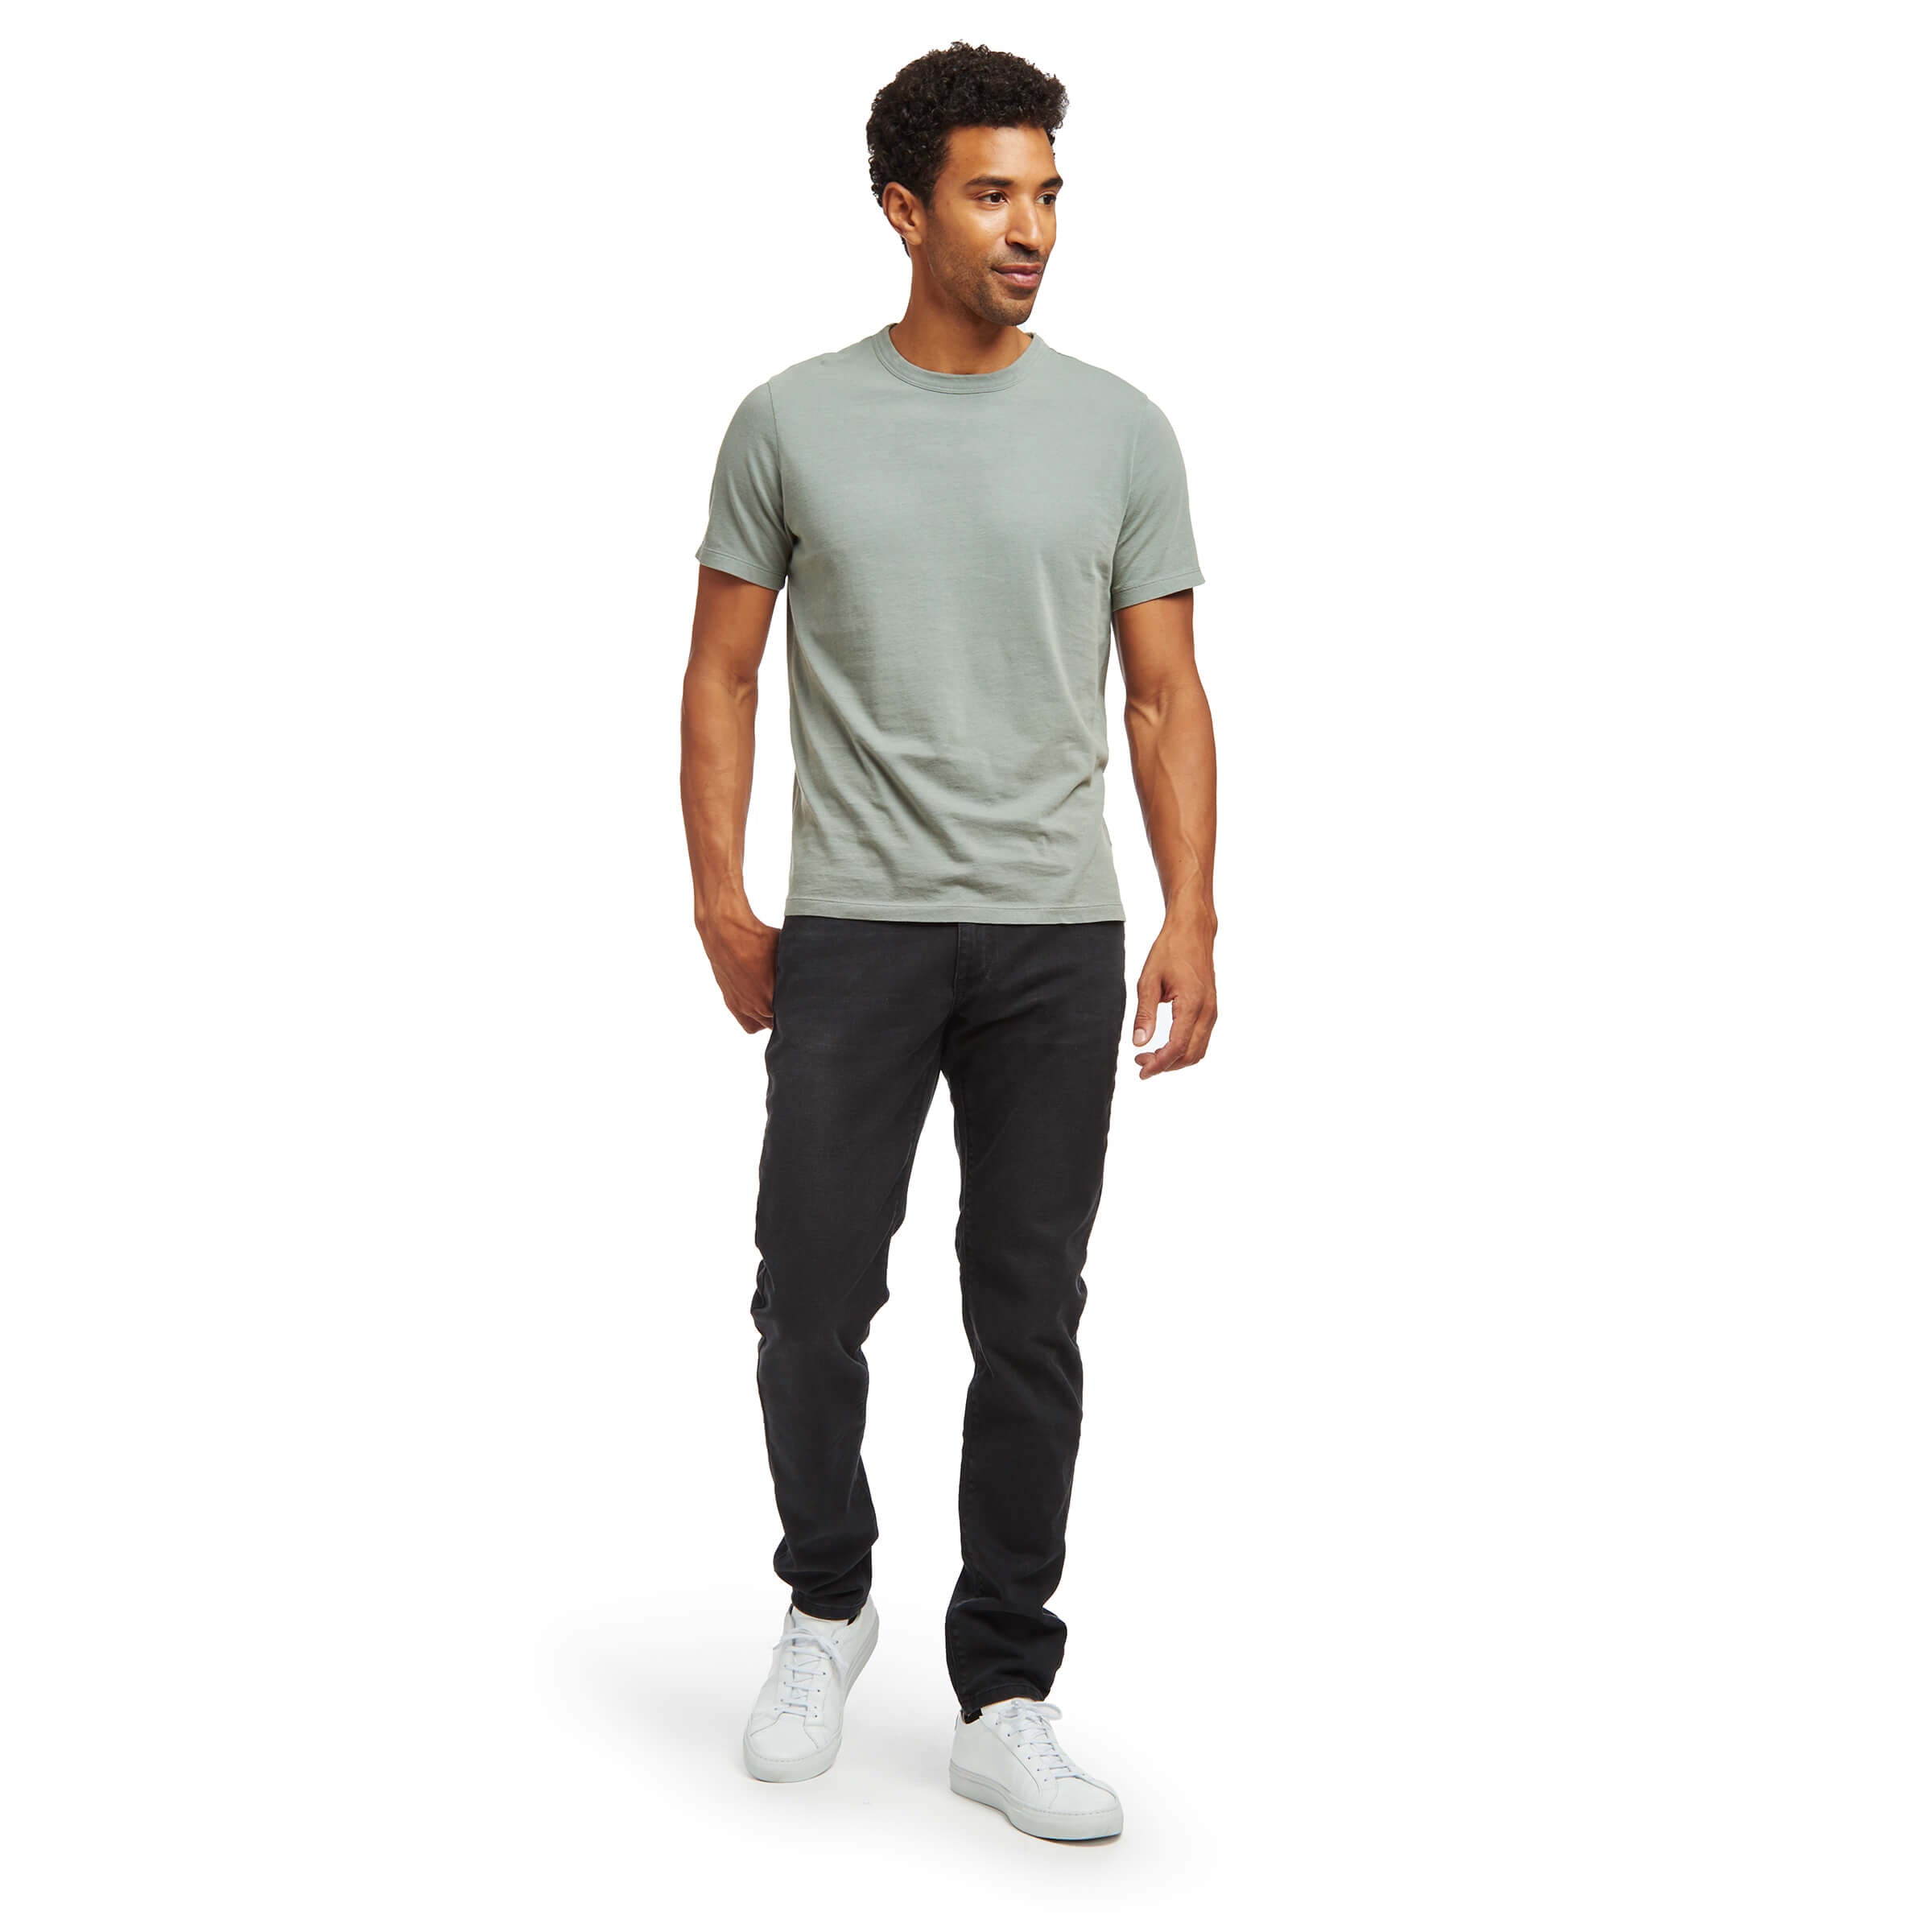 Men wearing Medium/Dark Gray Skinny Stone Jeans